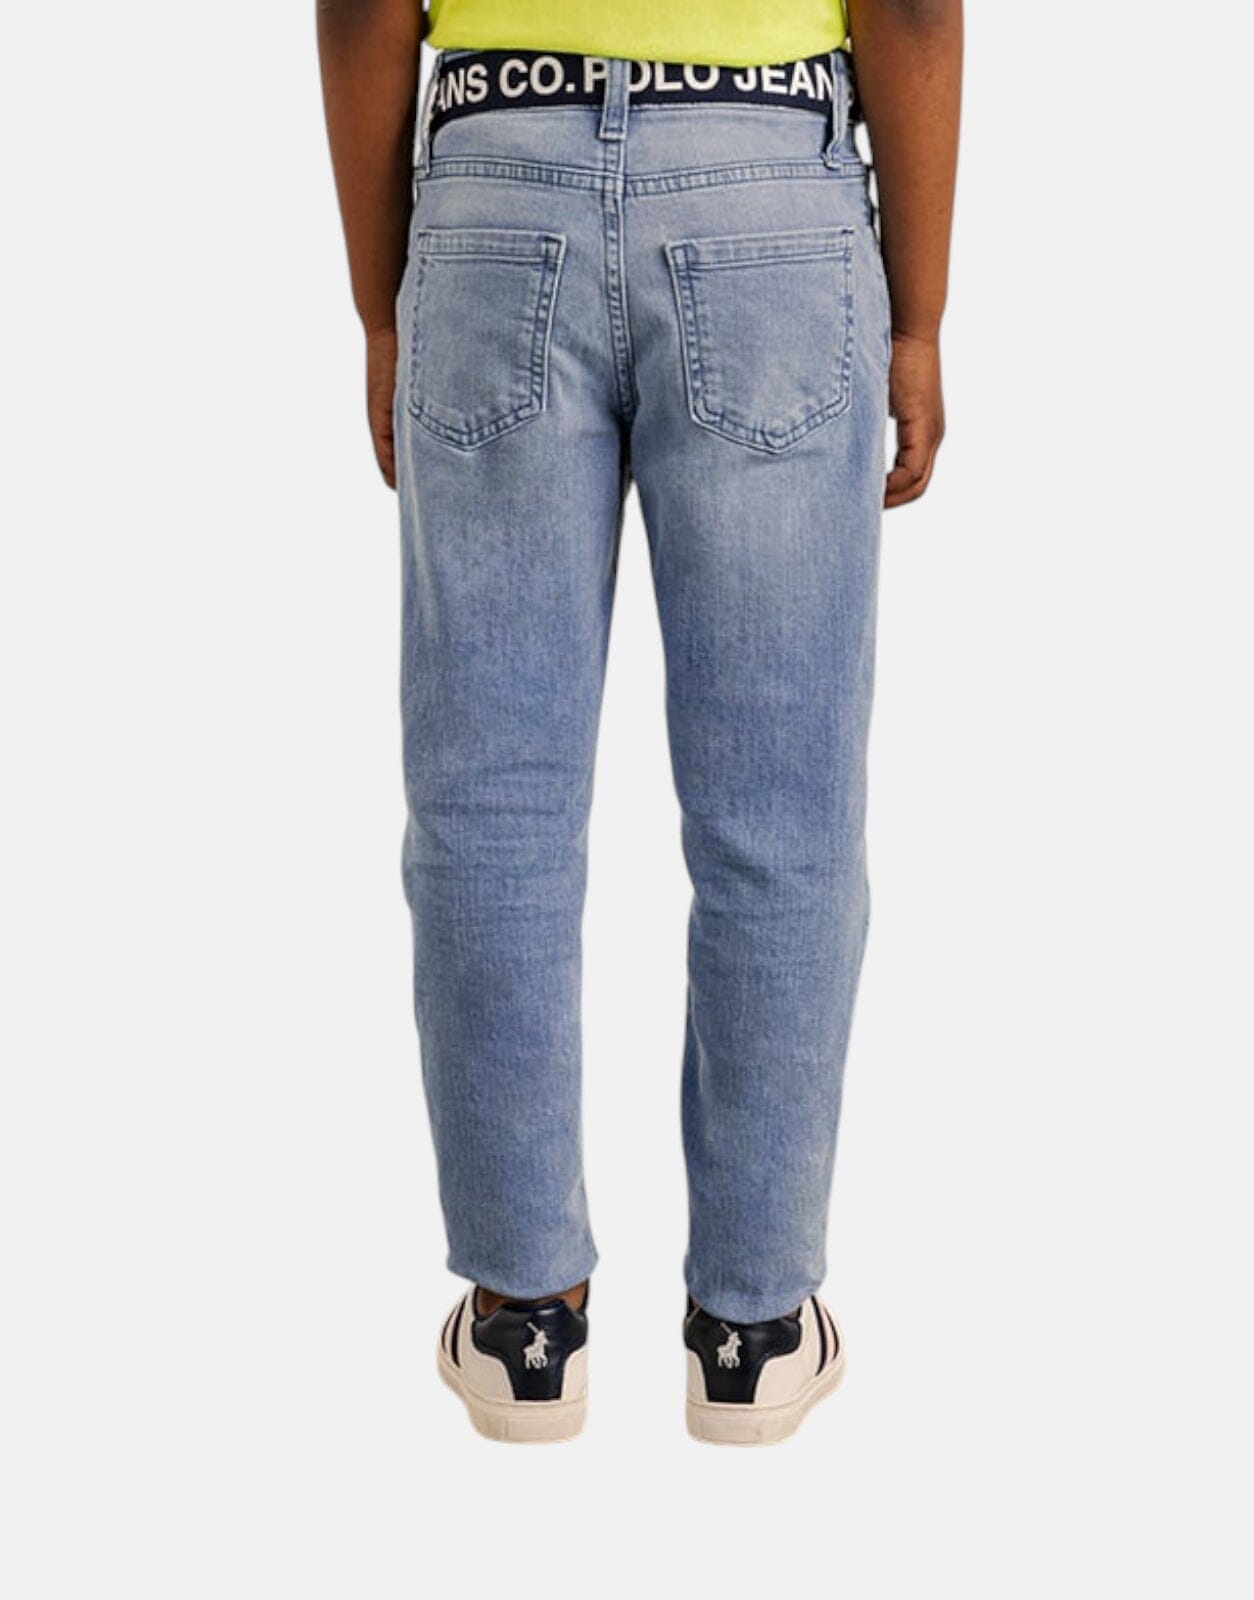 Polo Boys Jude Belted Slim Jeans Medium Wash - Subwear